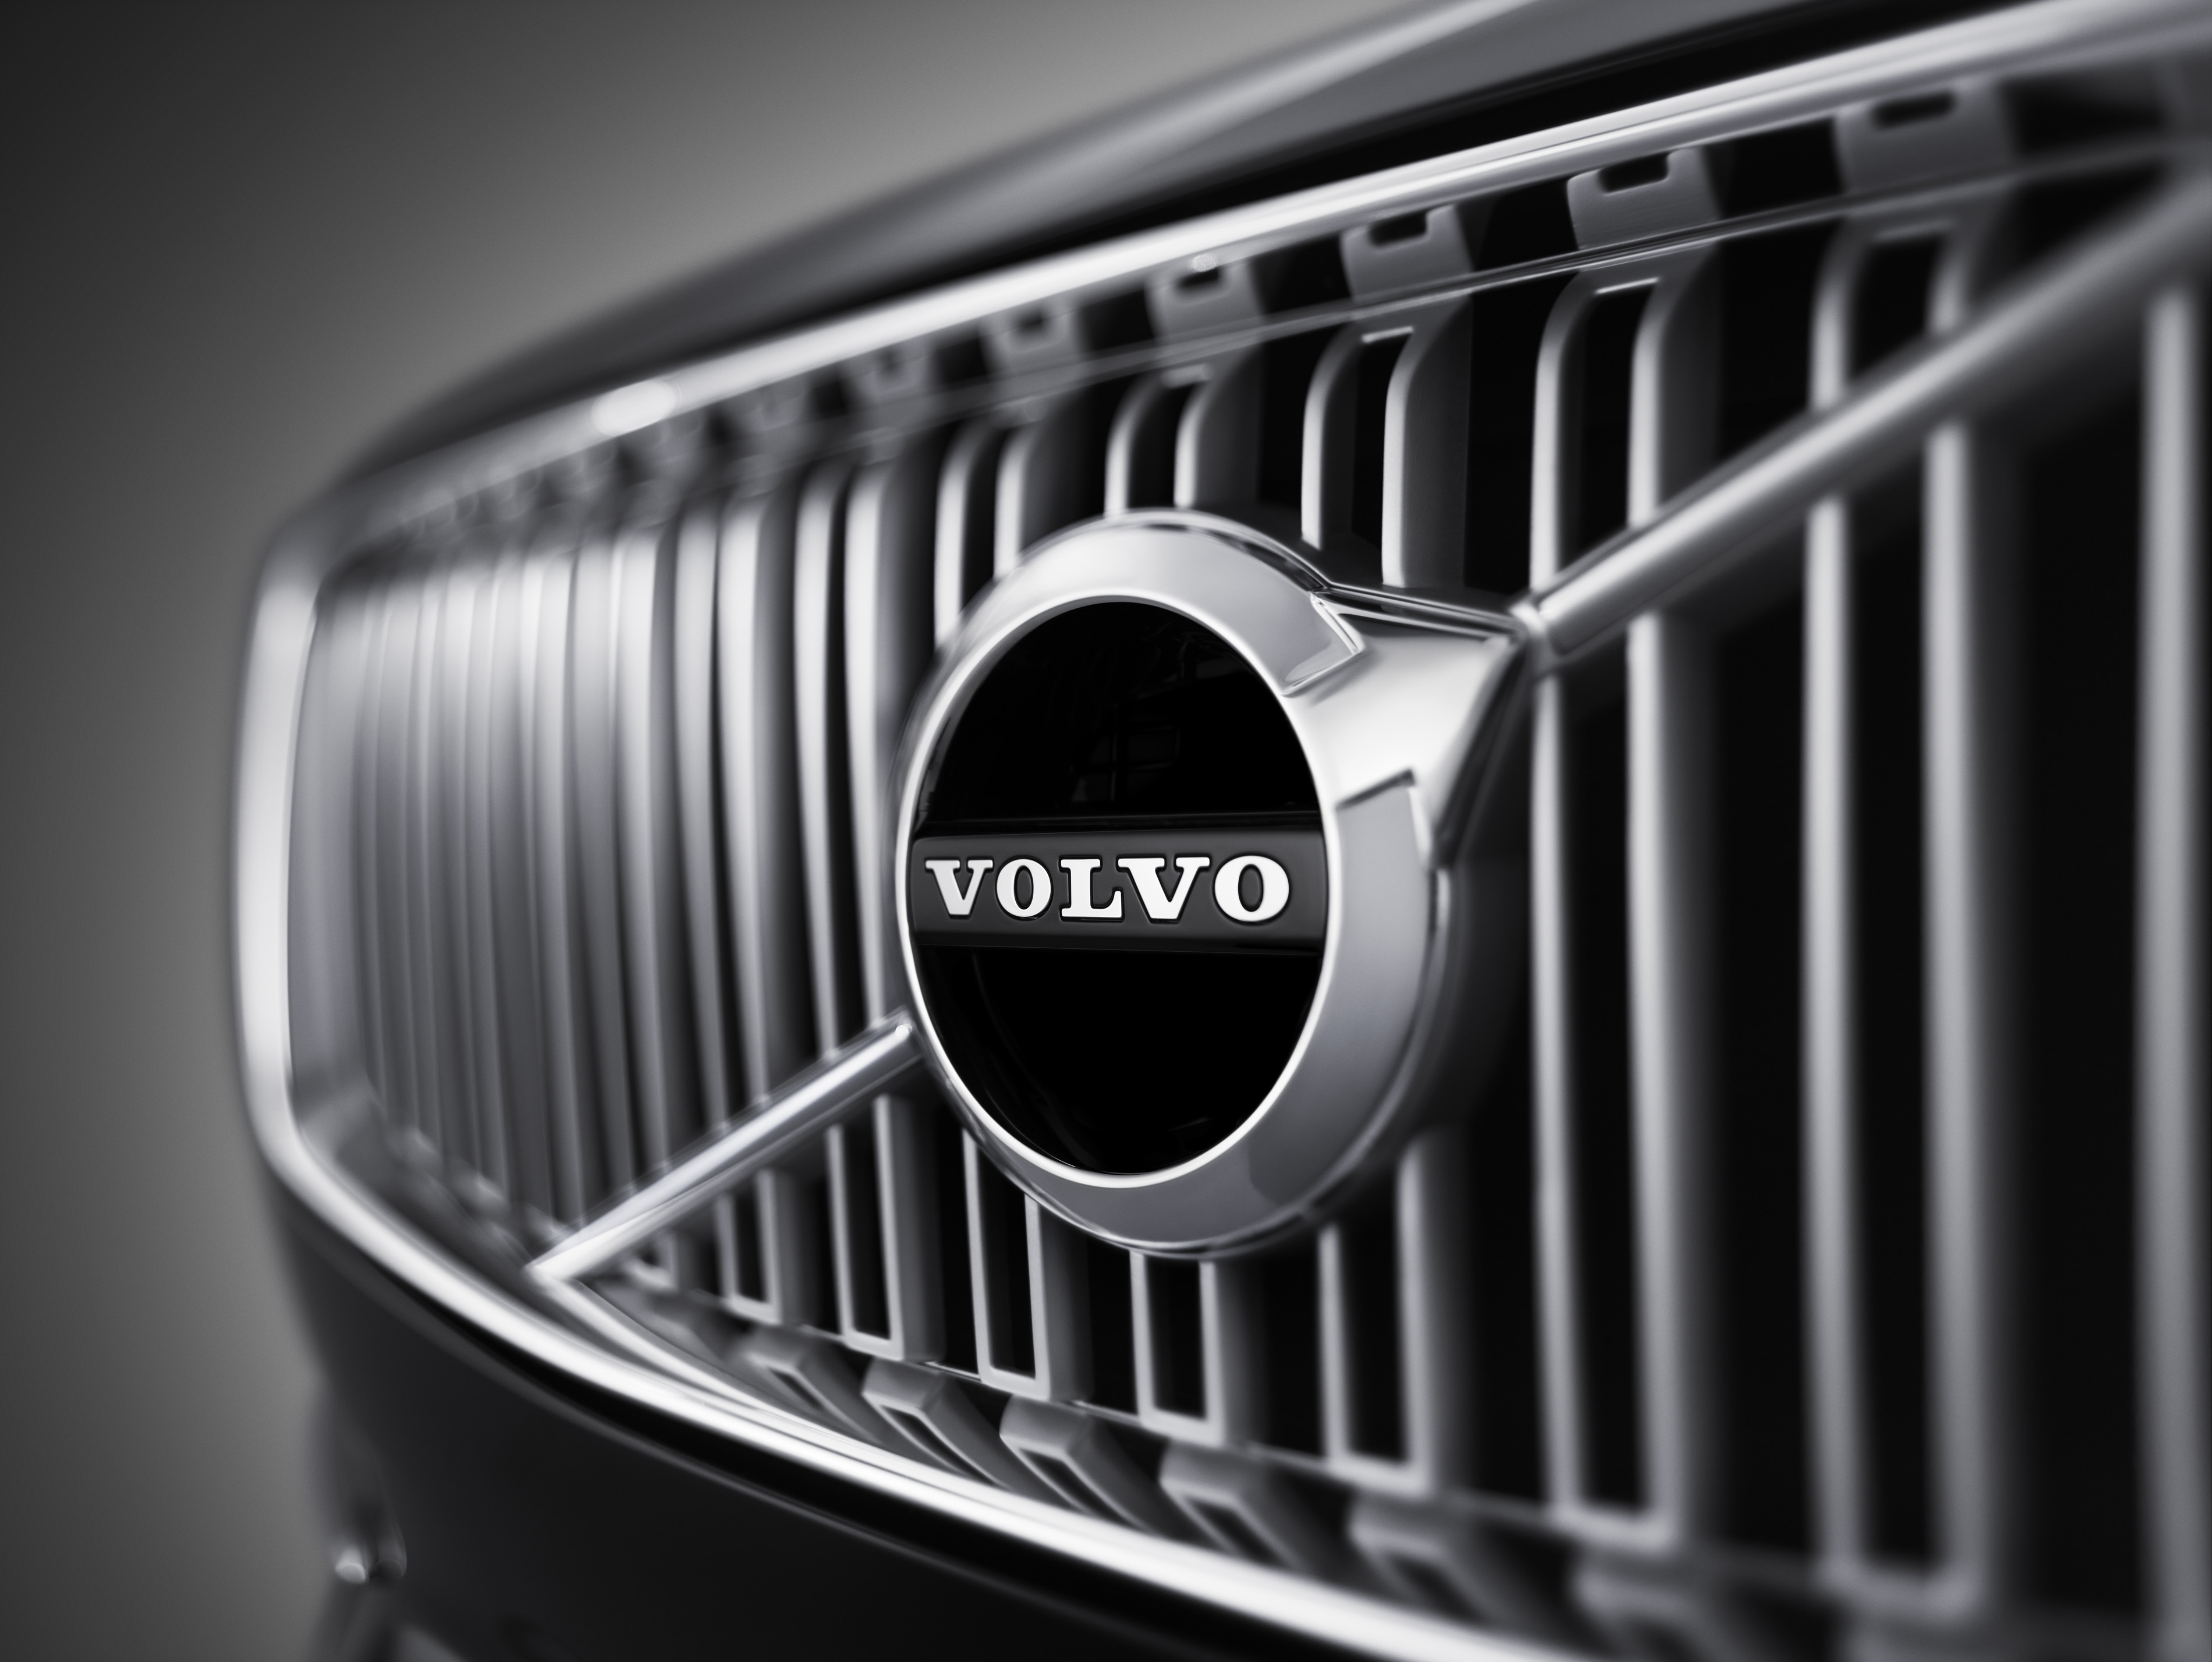 Volvo desktop wallpapers hd volvo backgrounds free images download